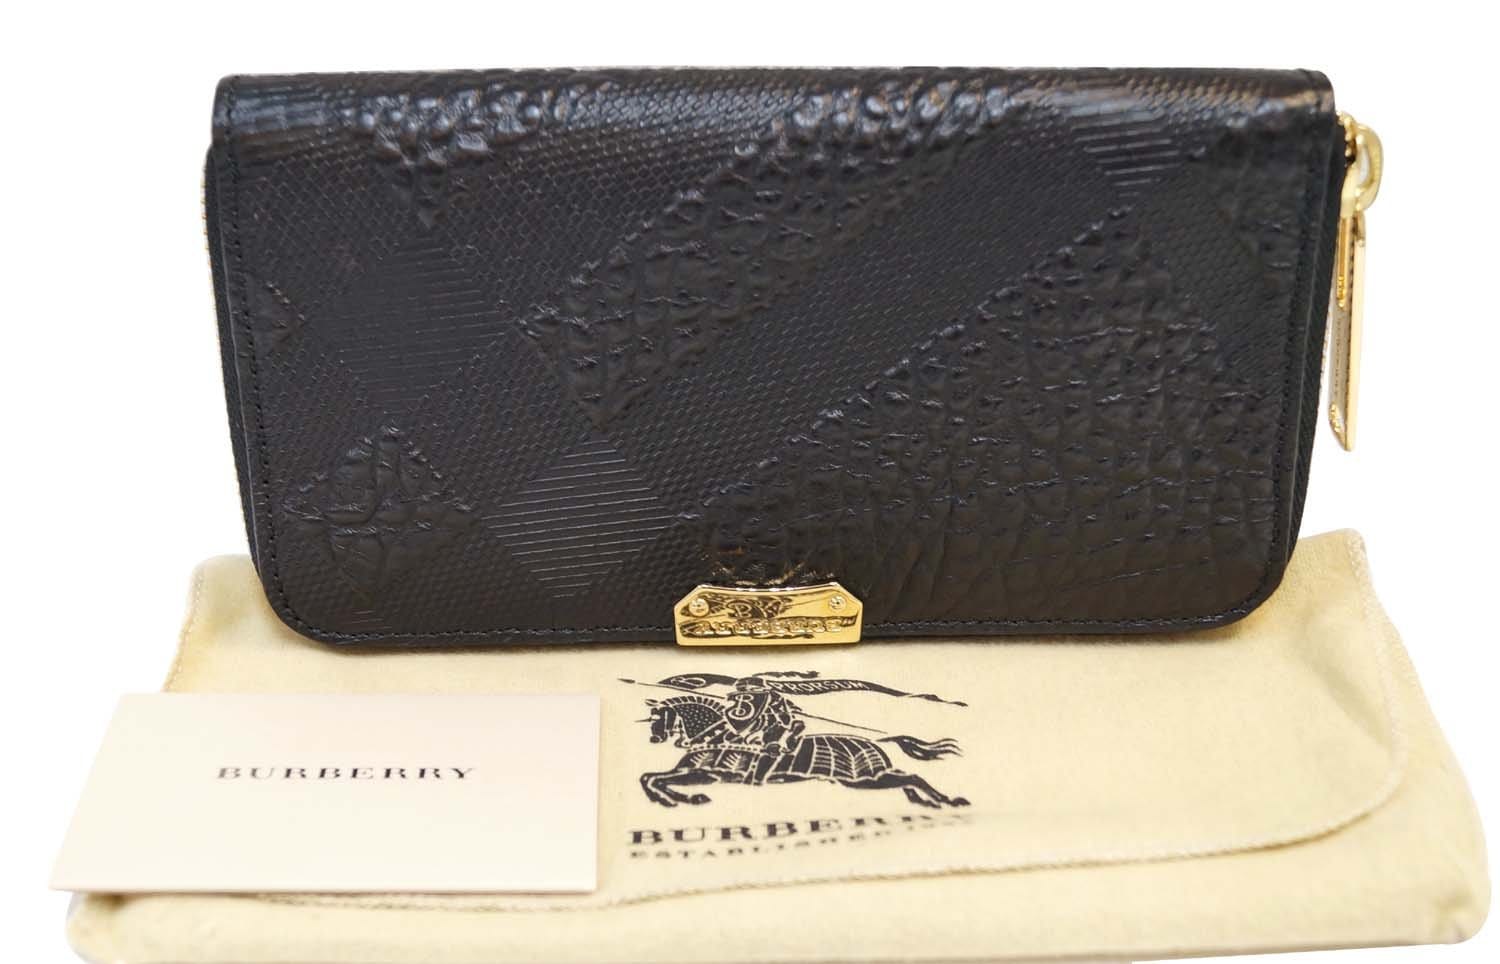 Burberry Women's Porter Checkered Textured Leather Zip Around Wallet